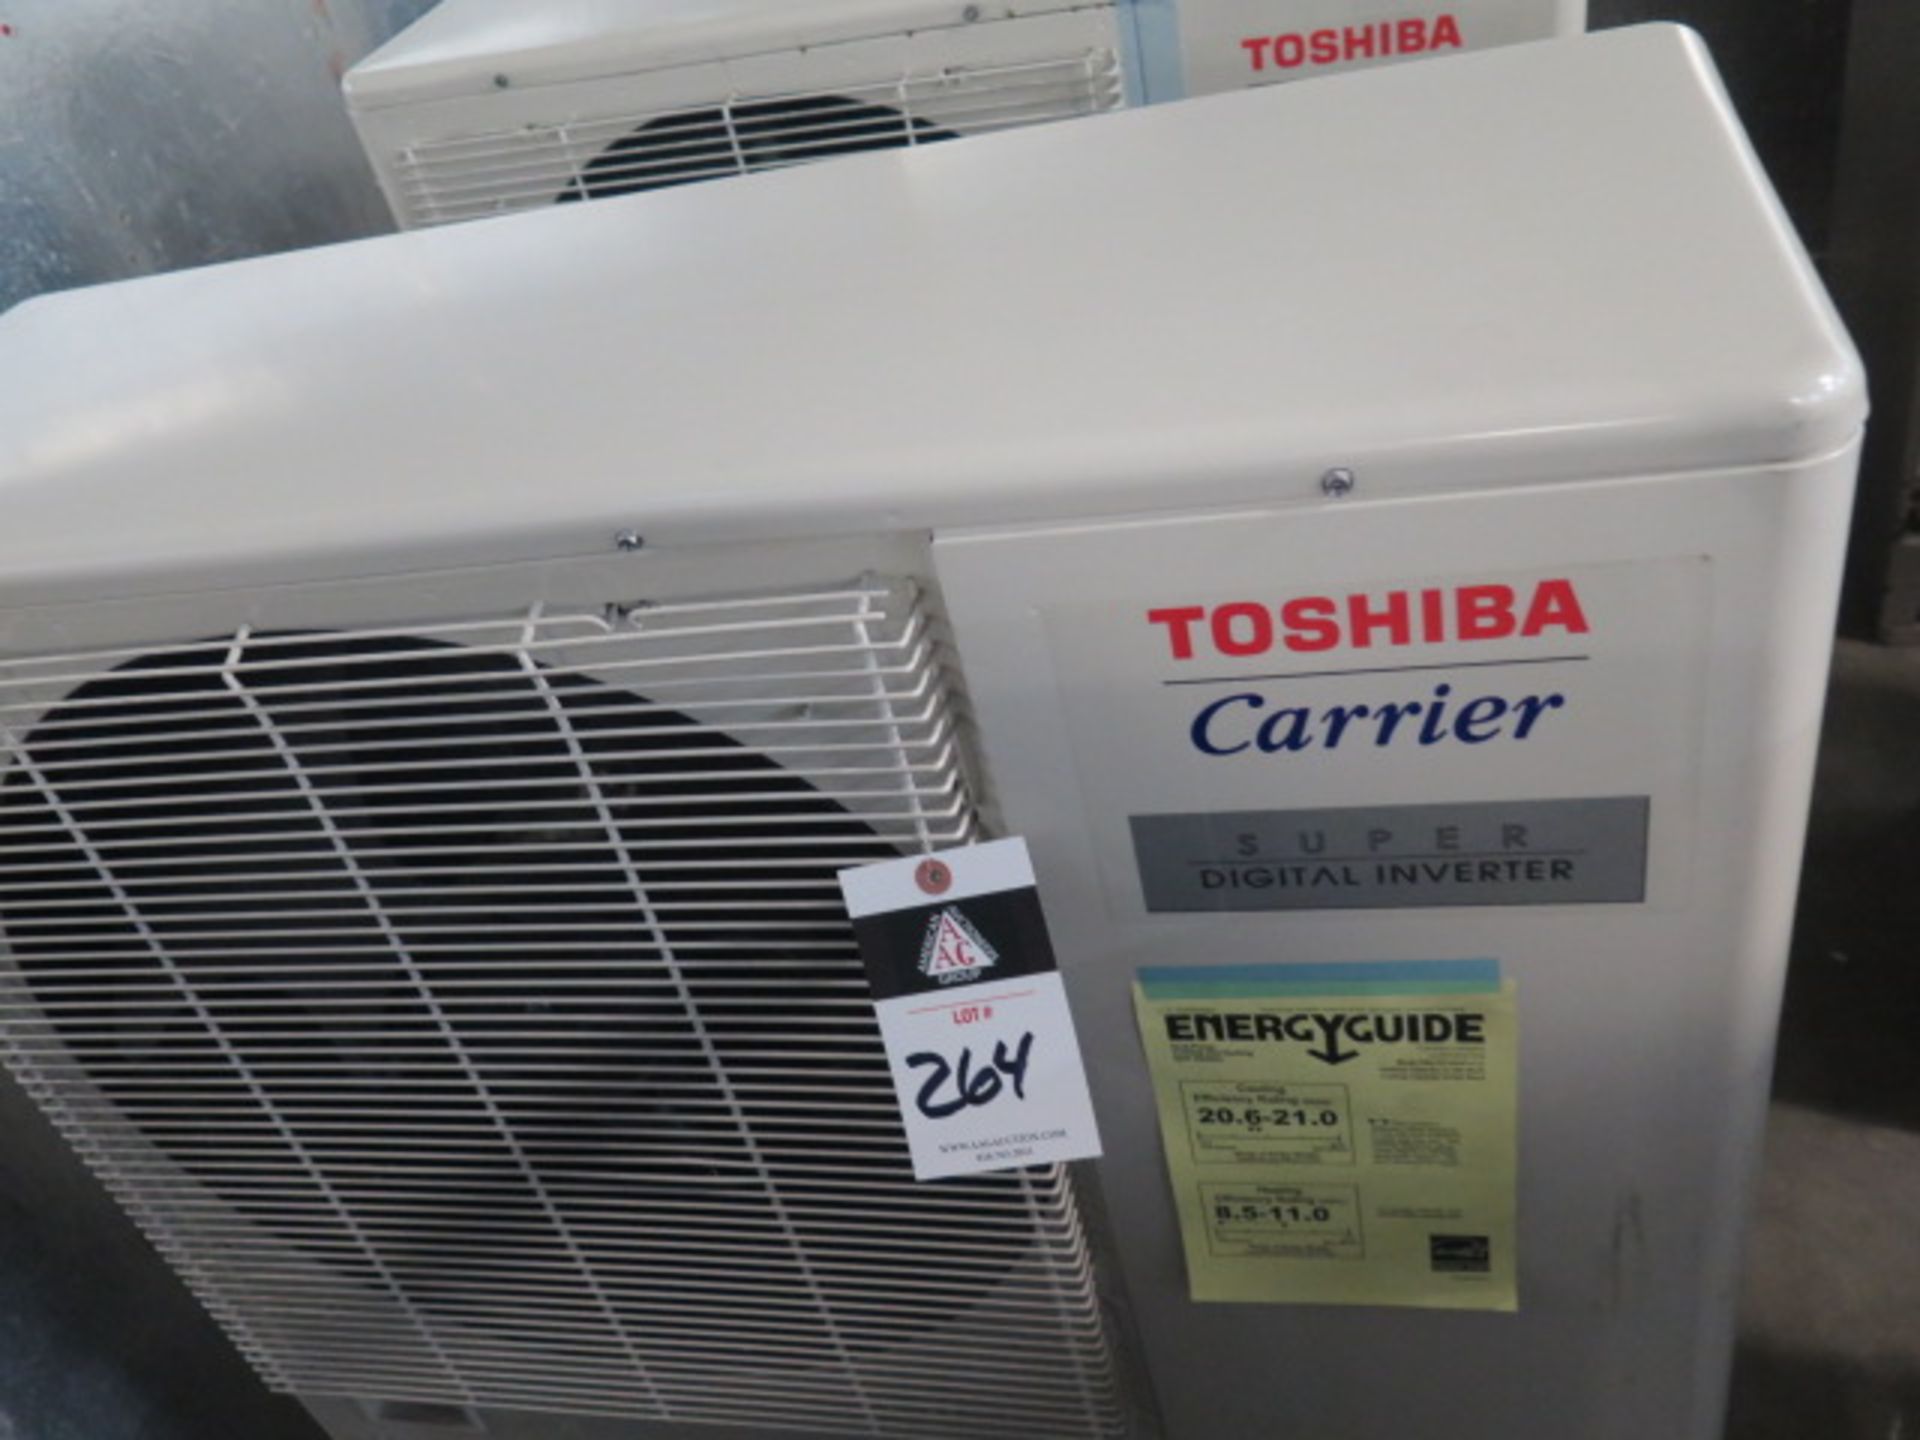 Toshiba Carrier Super Digital Inverter RAV-SP300AT2-UL Condenser Unit (SOLD AS-IS - NO WARRANTY) - Image 2 of 5